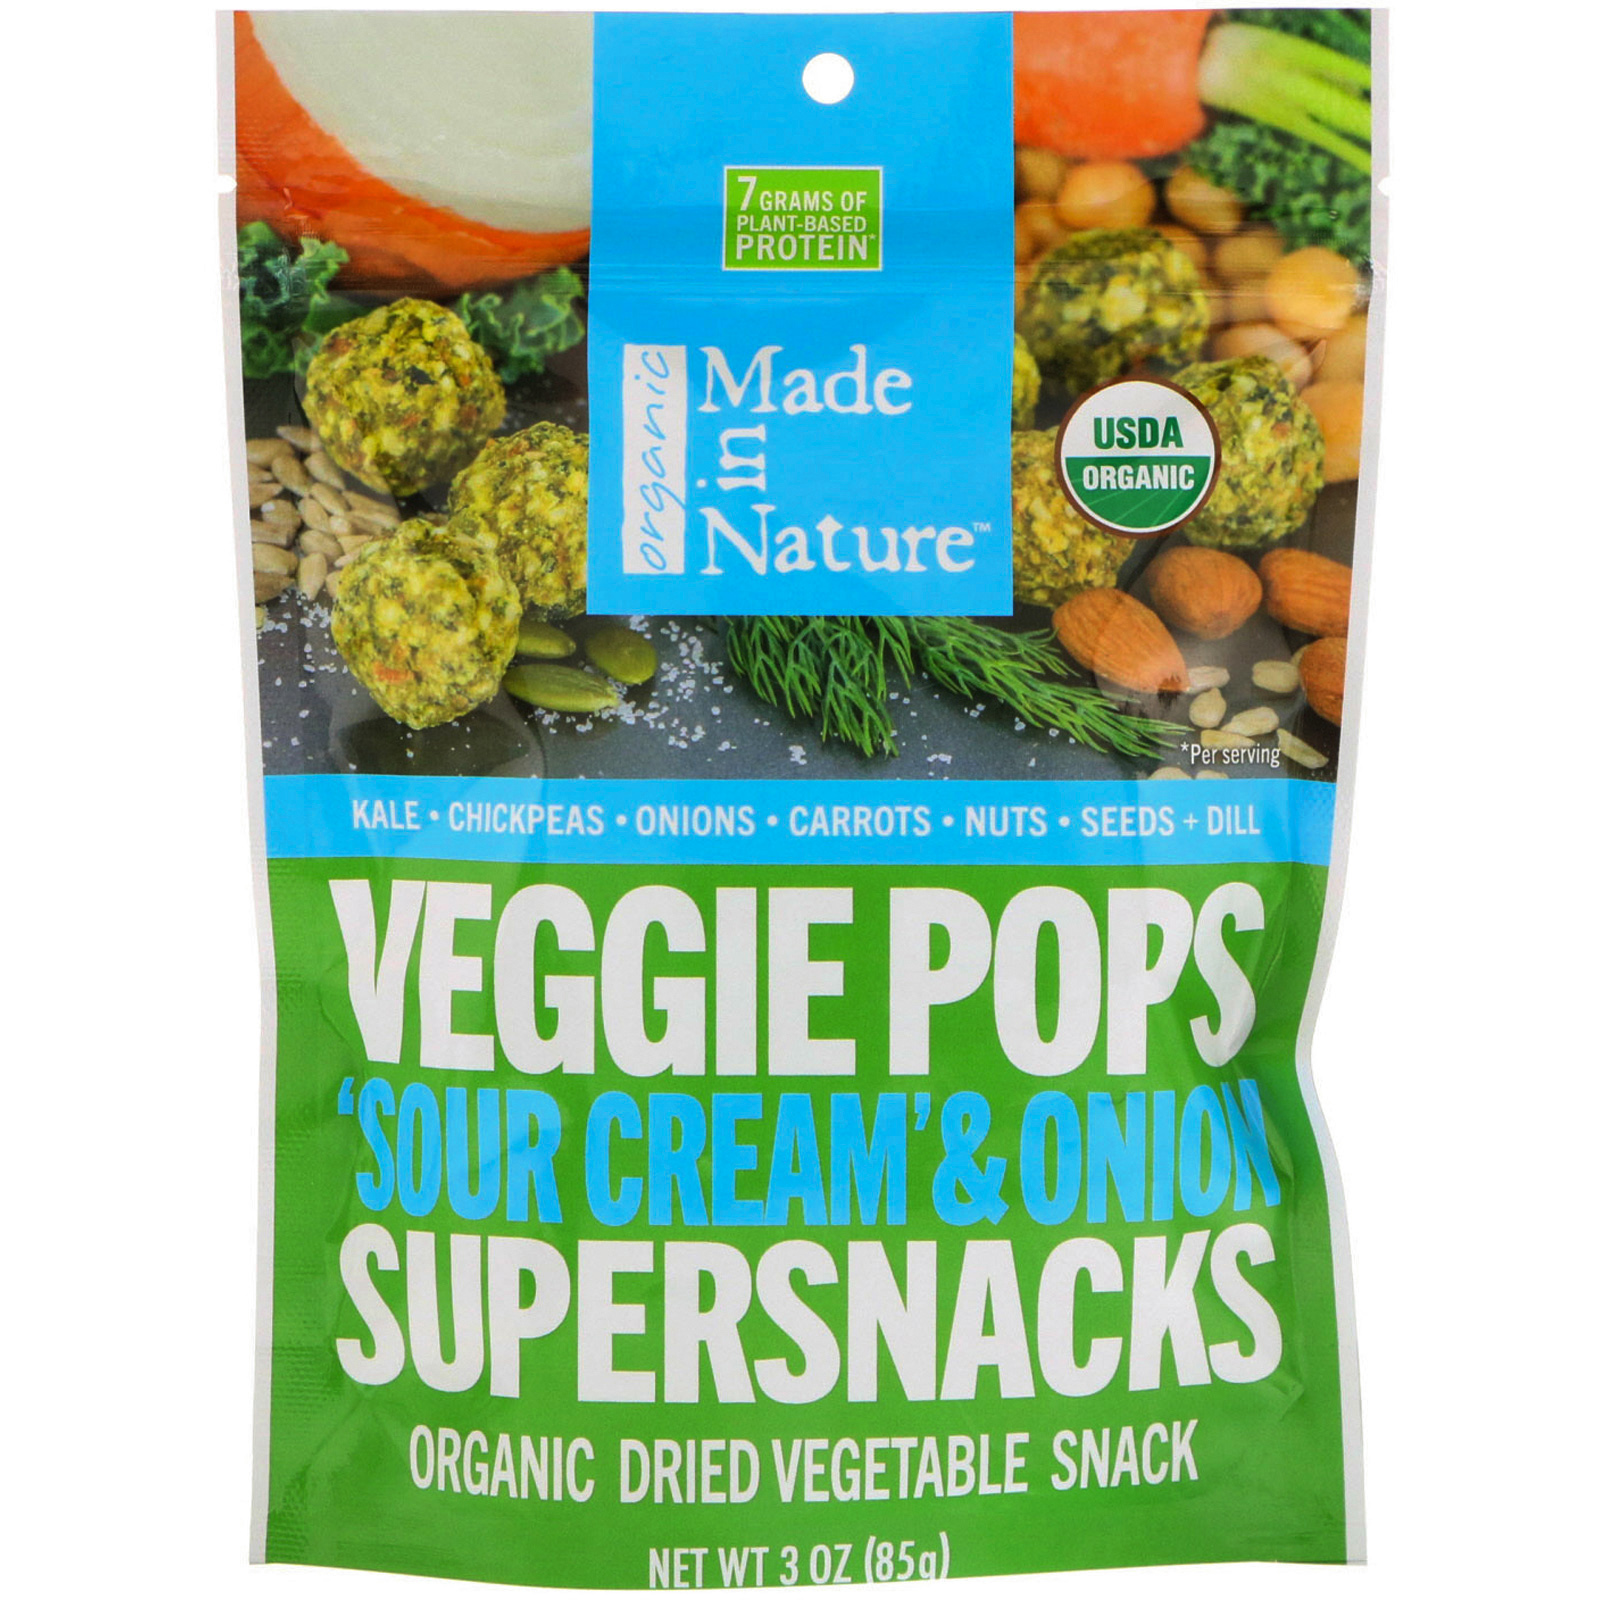 MADE IN NATURE - VEGGIE POPS SUPERSNACKS - (Sour Cream' & Onion) - 3oz